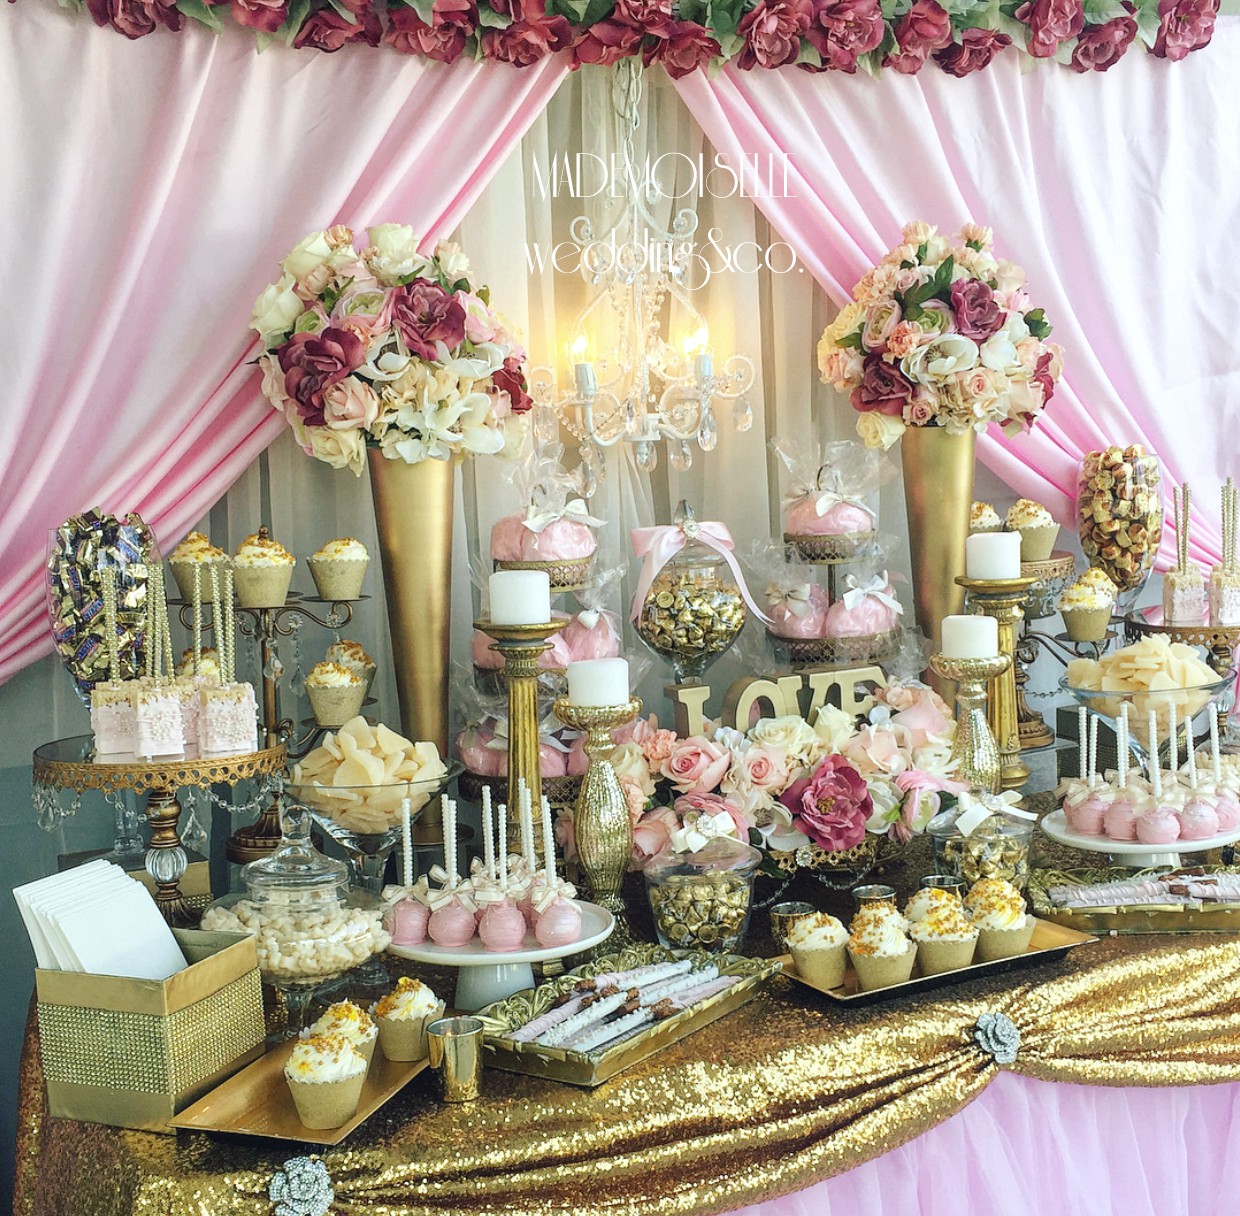 Slatki sto-dekoracija za slatki sto-dekoracija slatkog stola-kolaci-cupecakes-roze zlatna dekoracija slatkog stola-muffins-cakepops-dekoracija krstenja-radujevac-negotin-dekoracija rodjendana